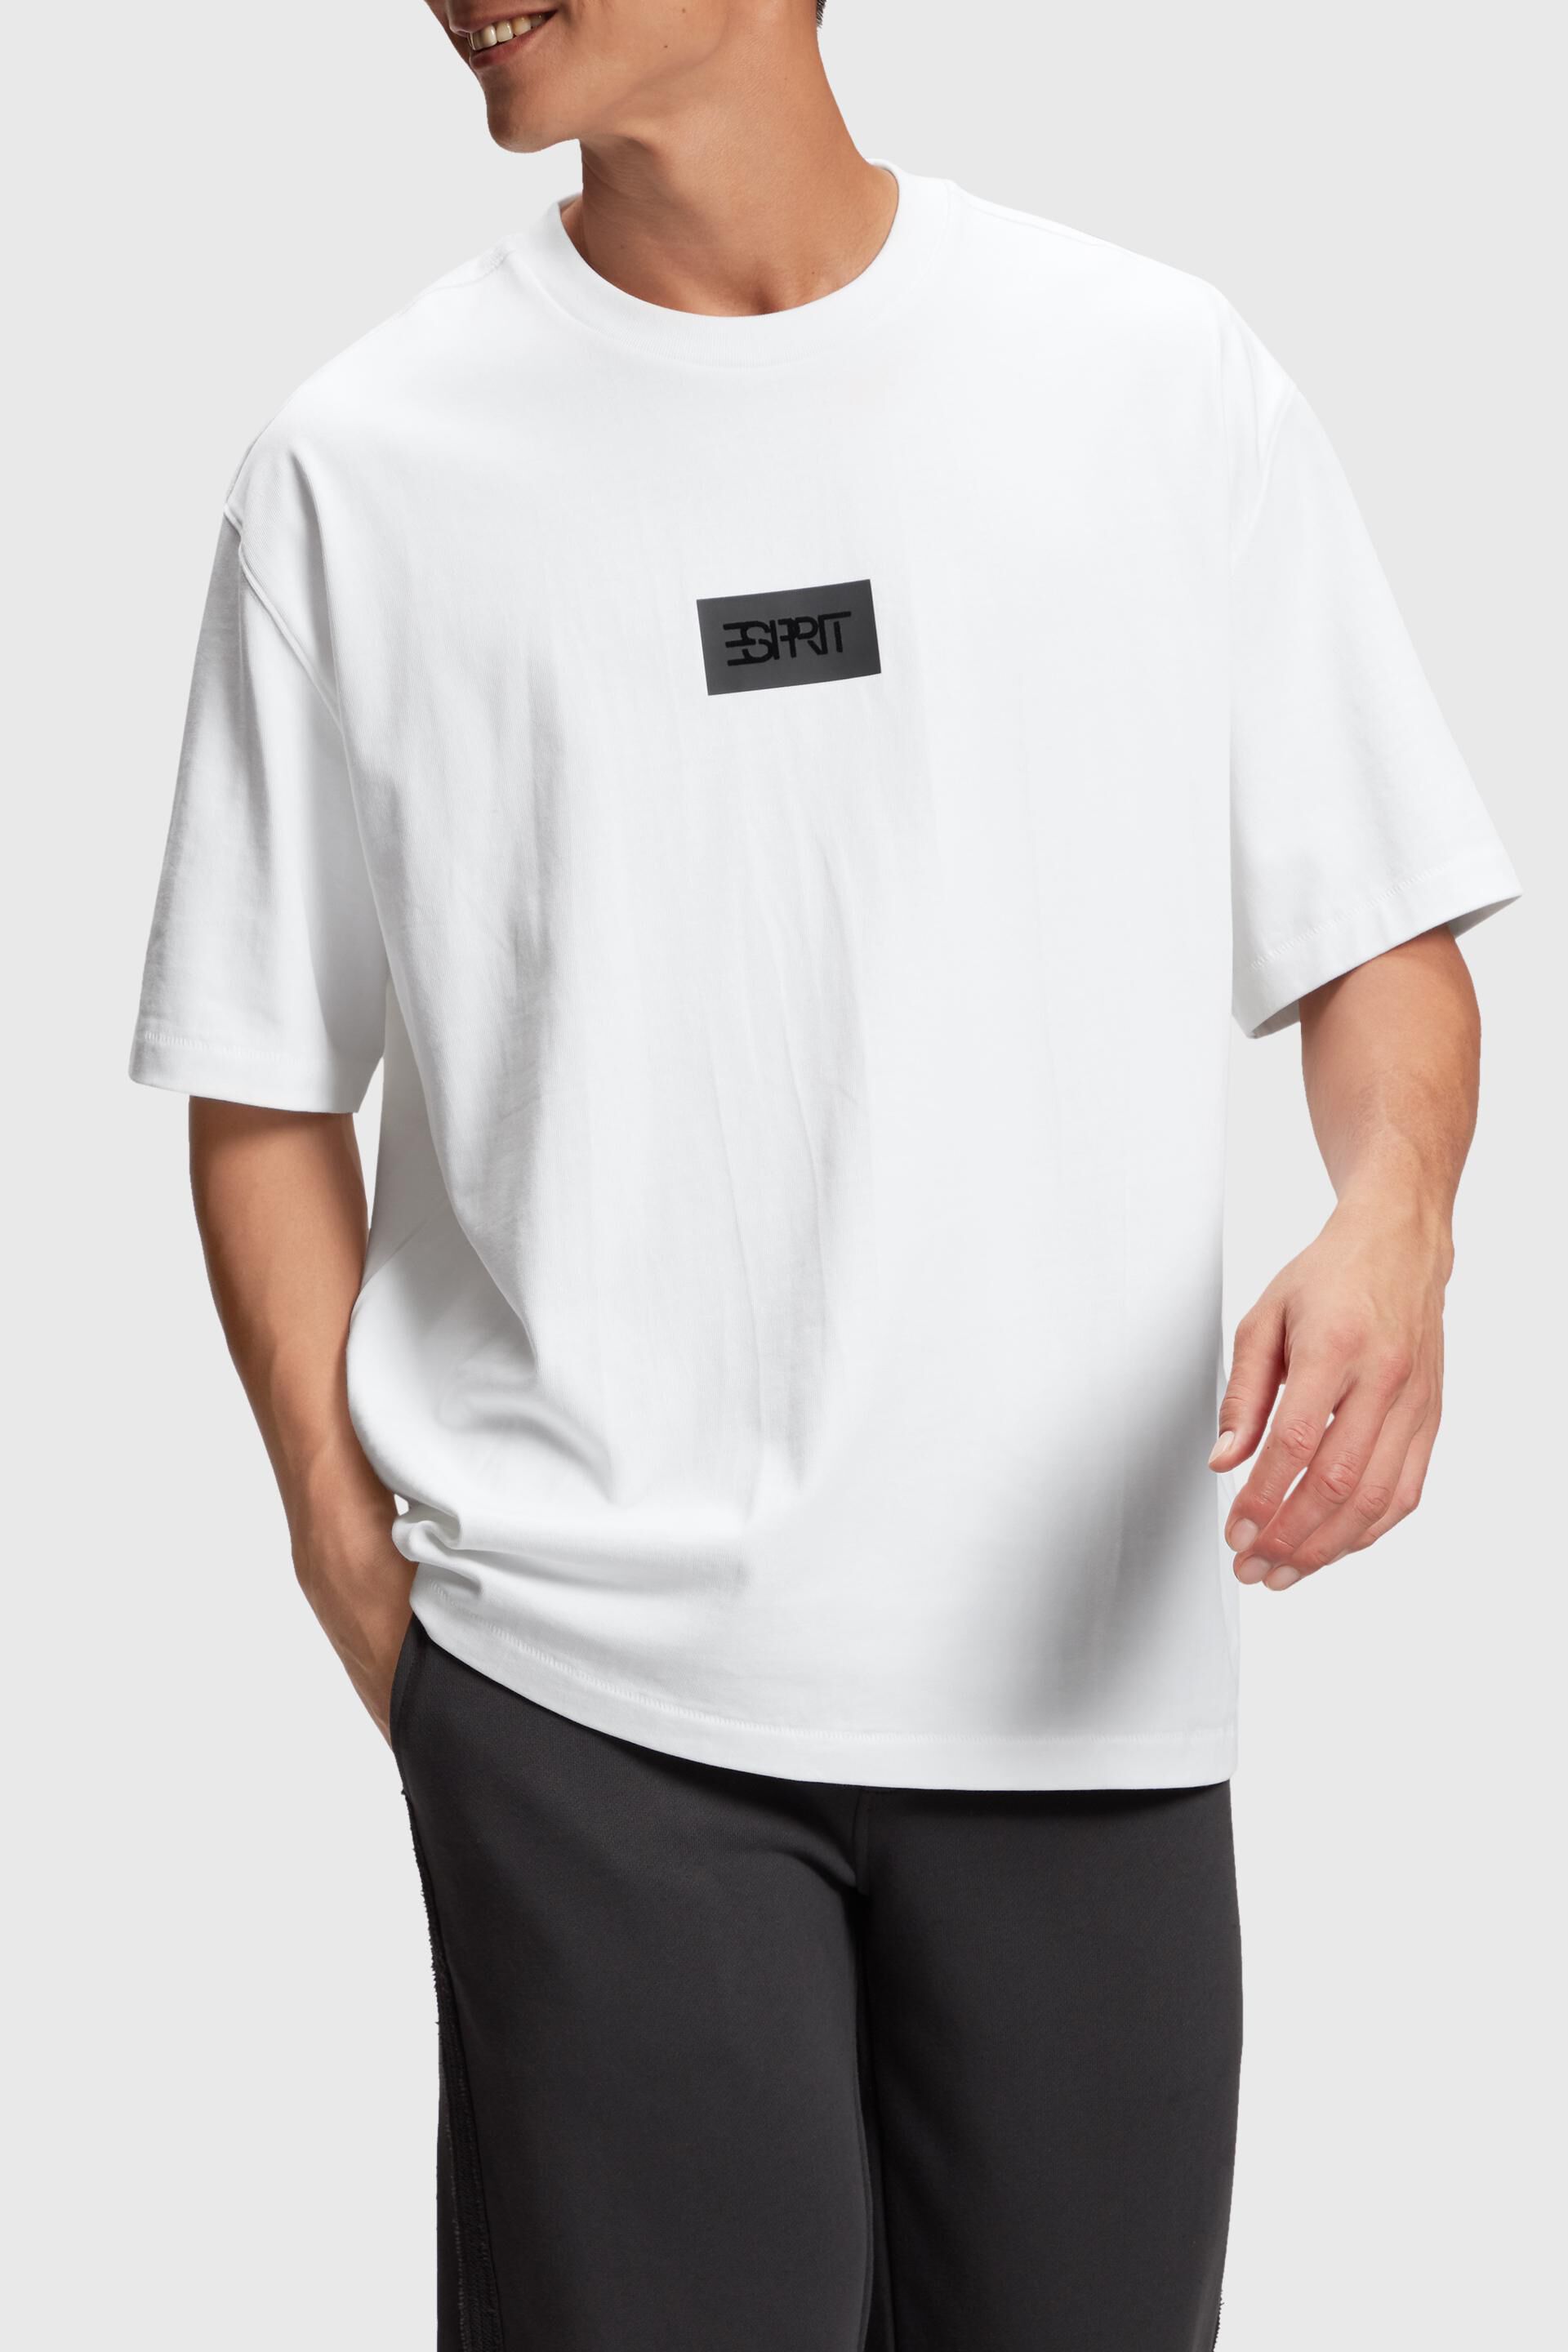 Esprit Boxy t-shirt fit